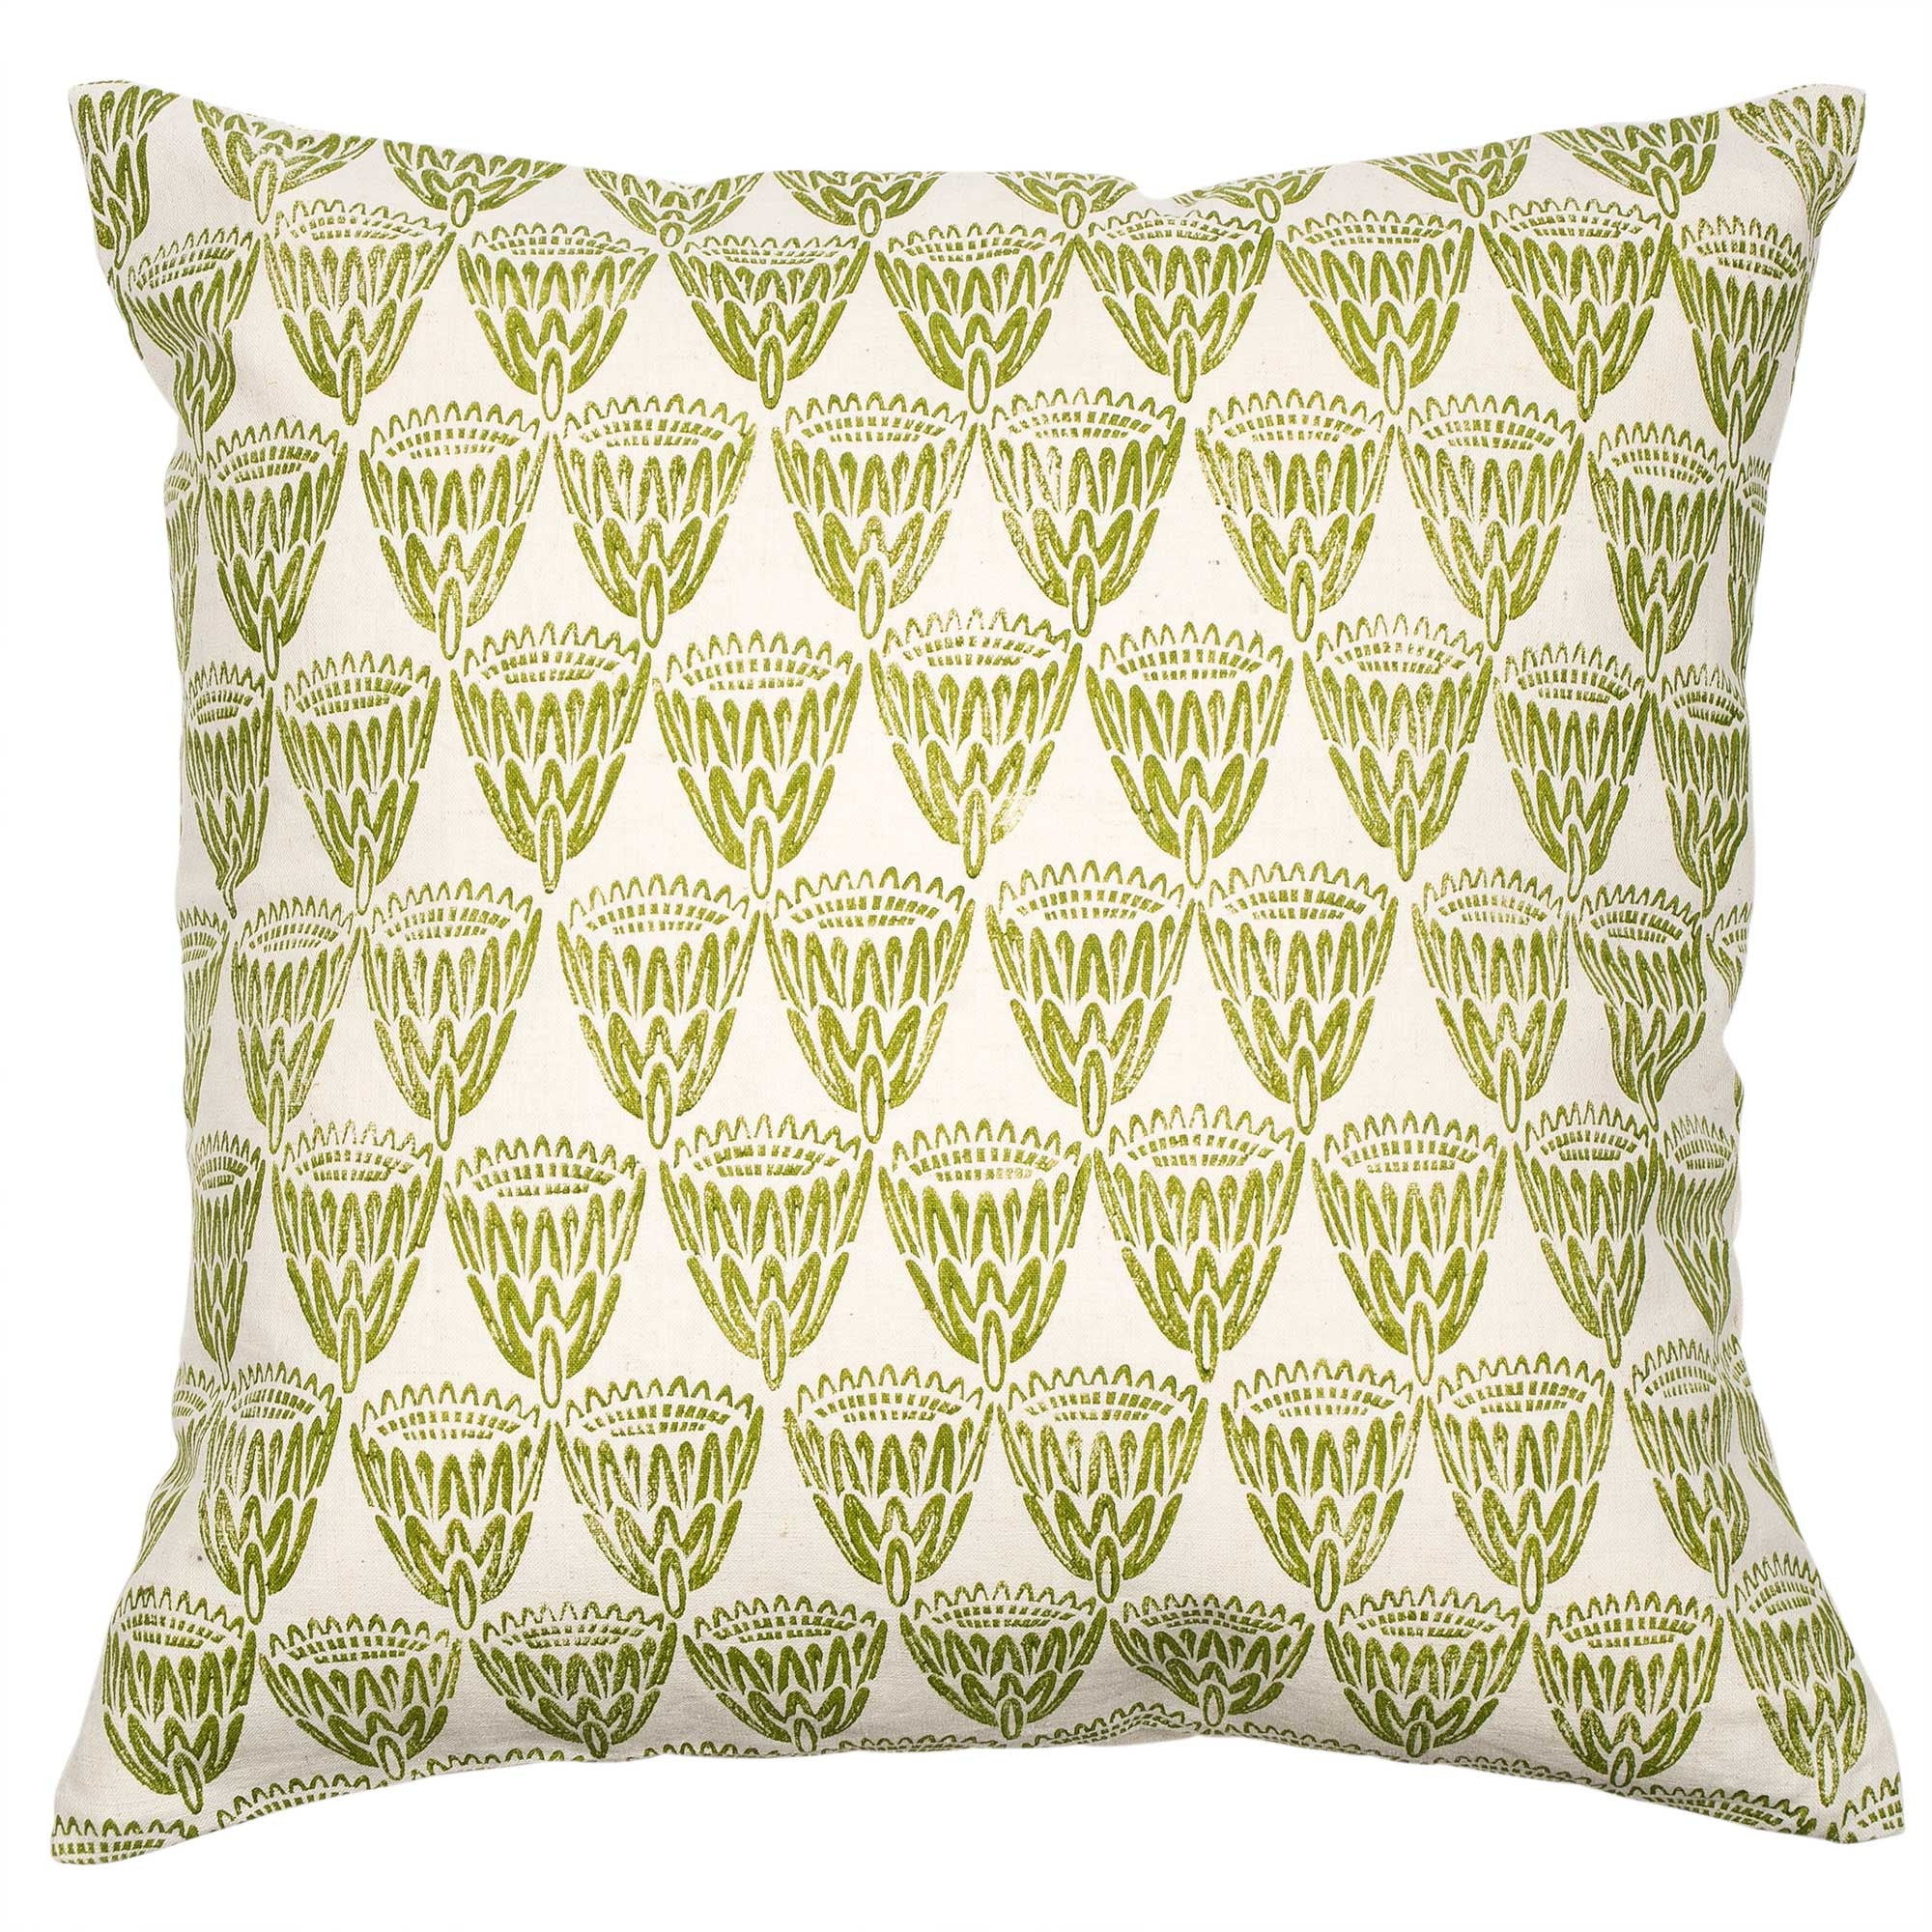 Green King Protea cushion